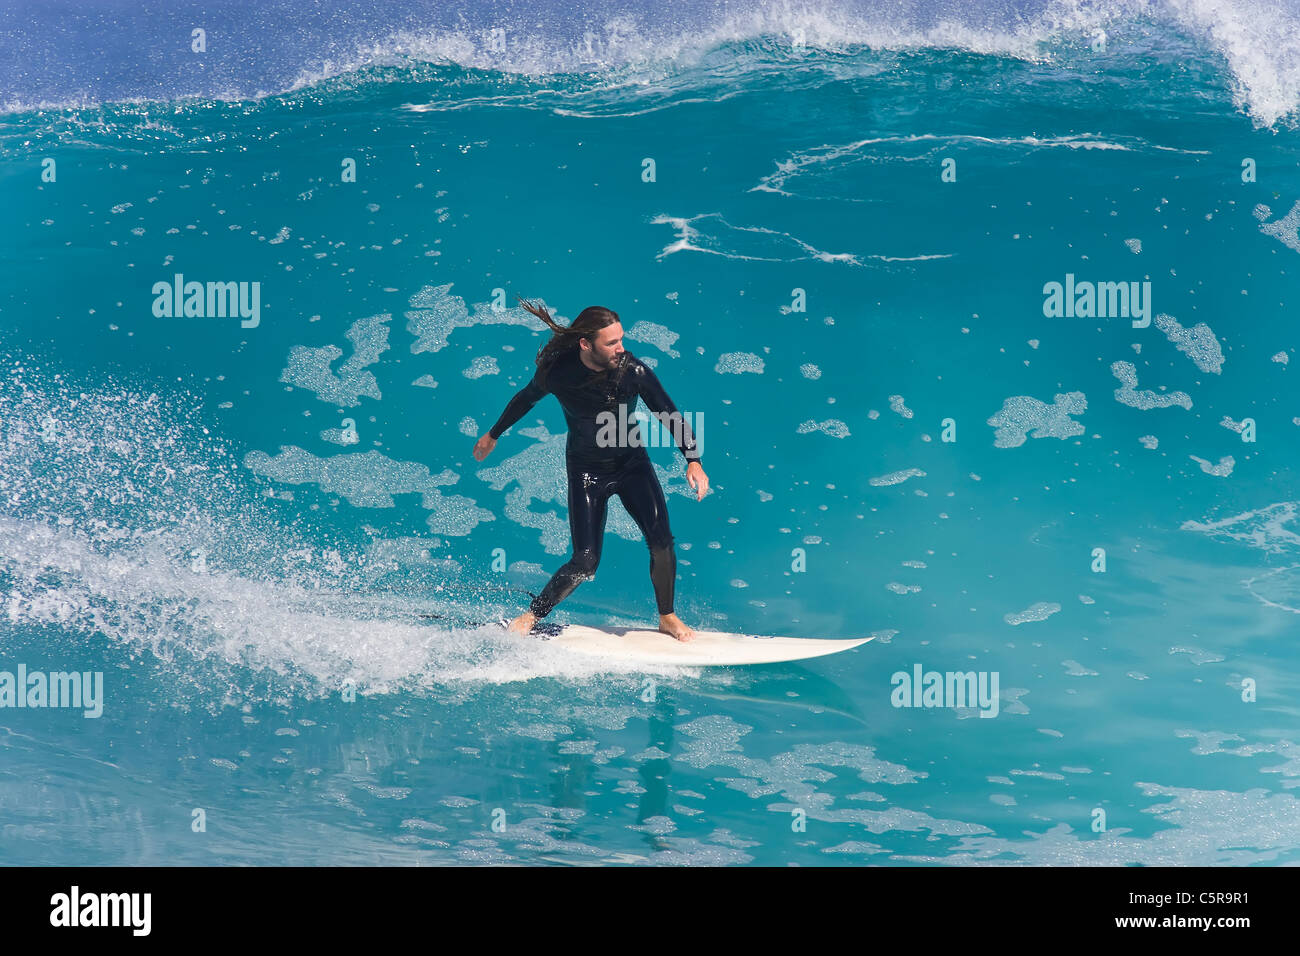 Surfer sonríe como él monta hermosa onda azul celeste. Foto de stock